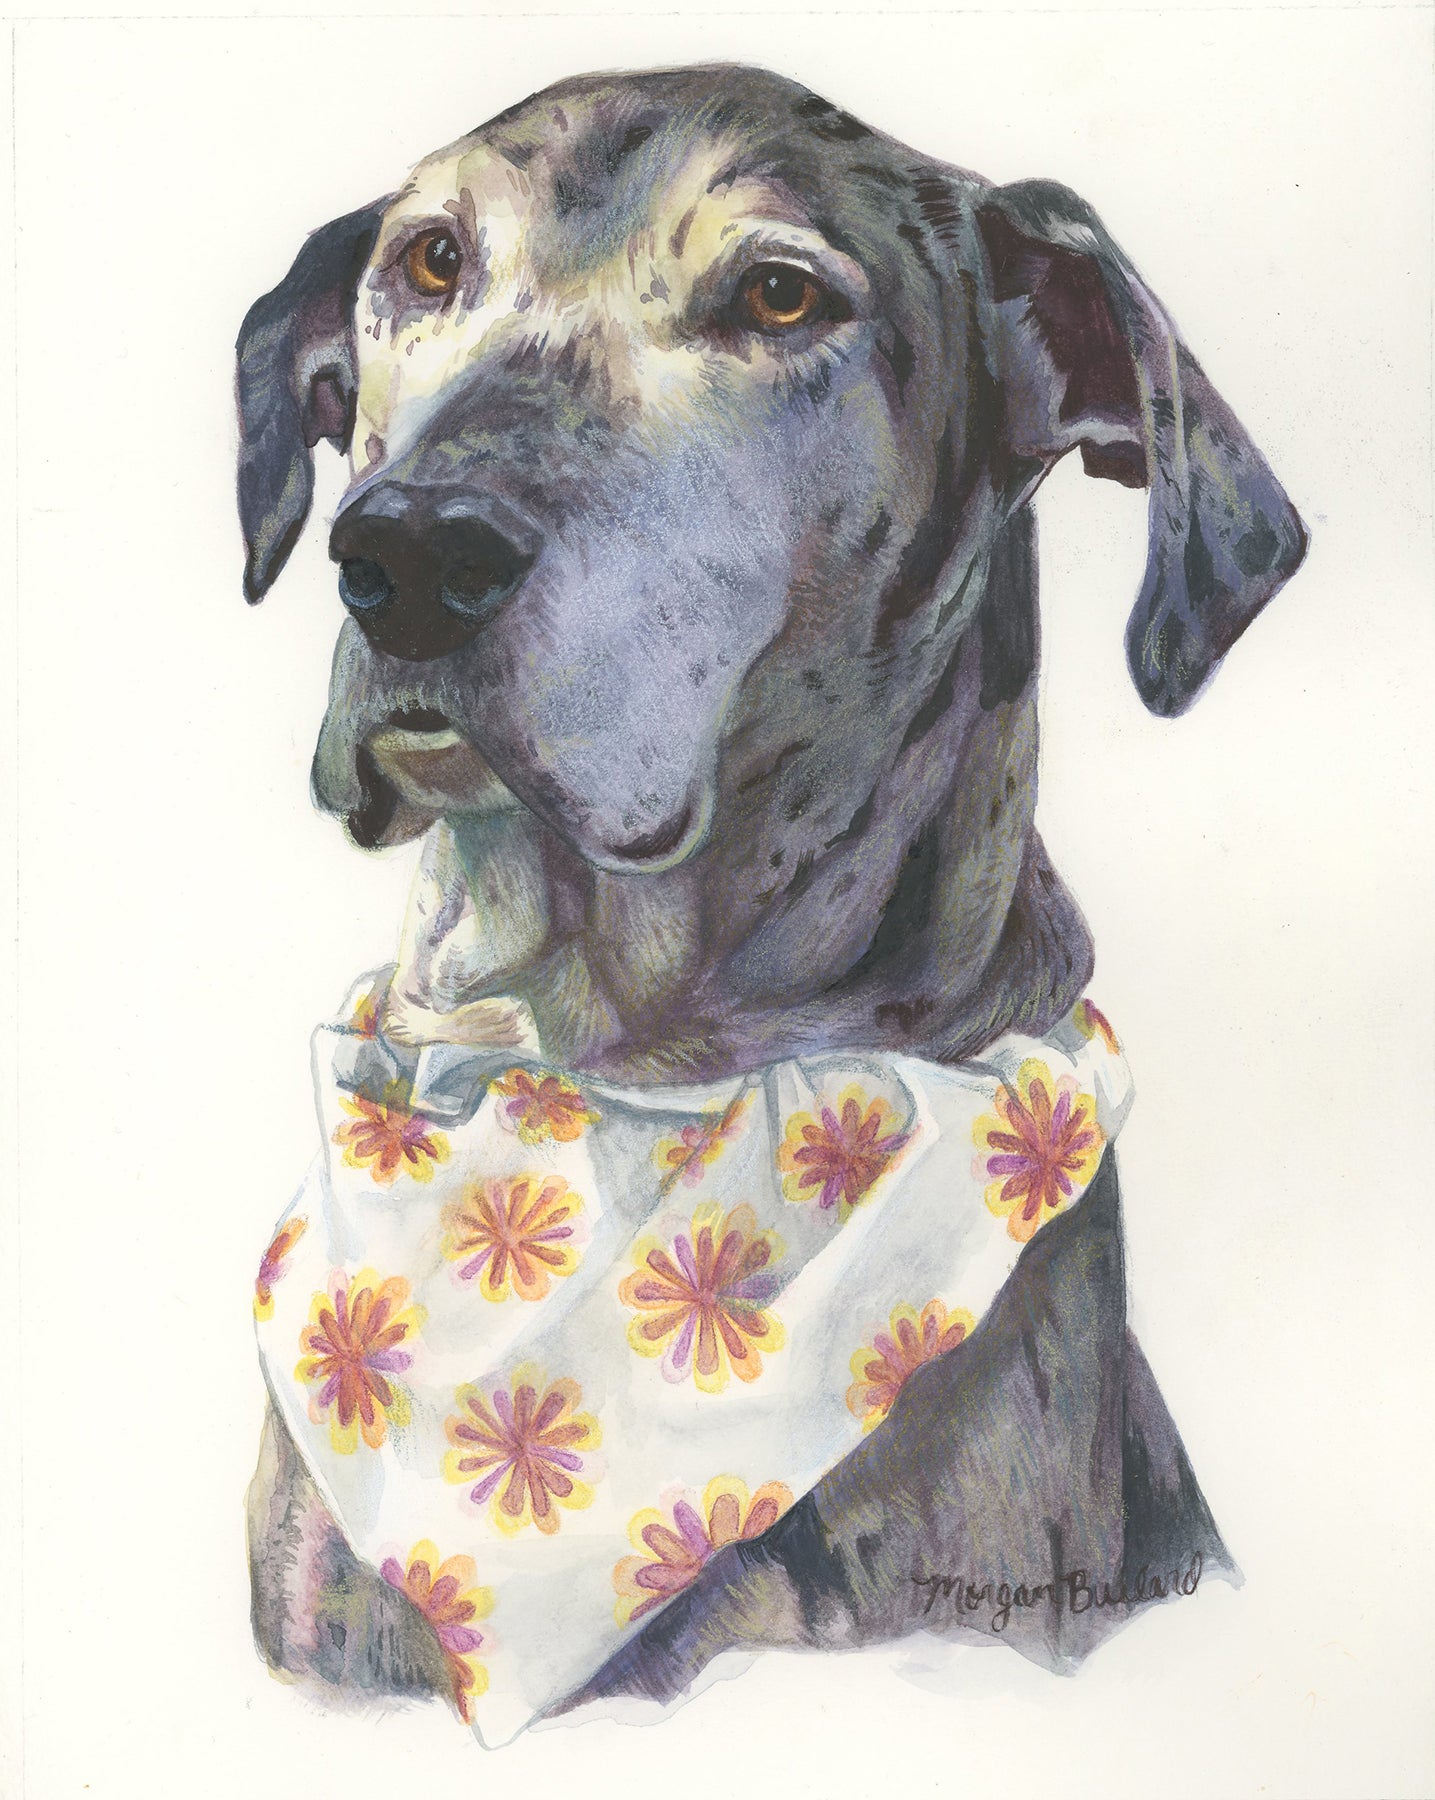 Commission a pet portrait by Morgan Bullard, a graduate of Detroit's acclaimed Center for Creative Studies.